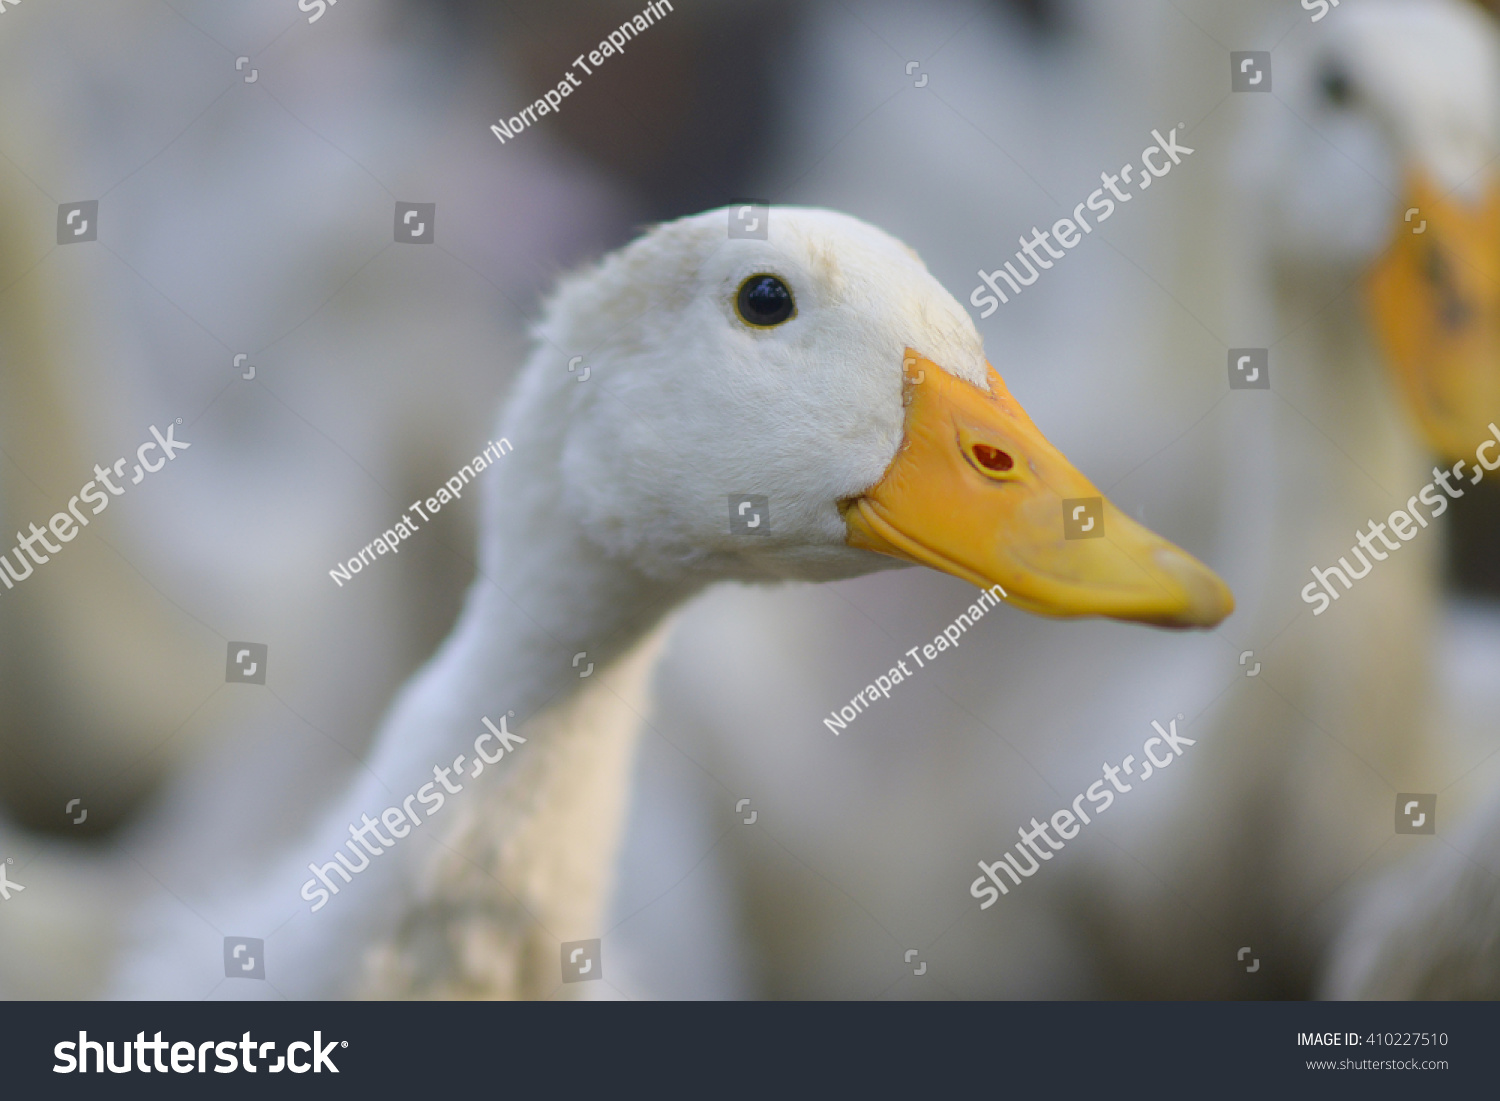 White Duck Stock Photo 410227510 : Shutterstock